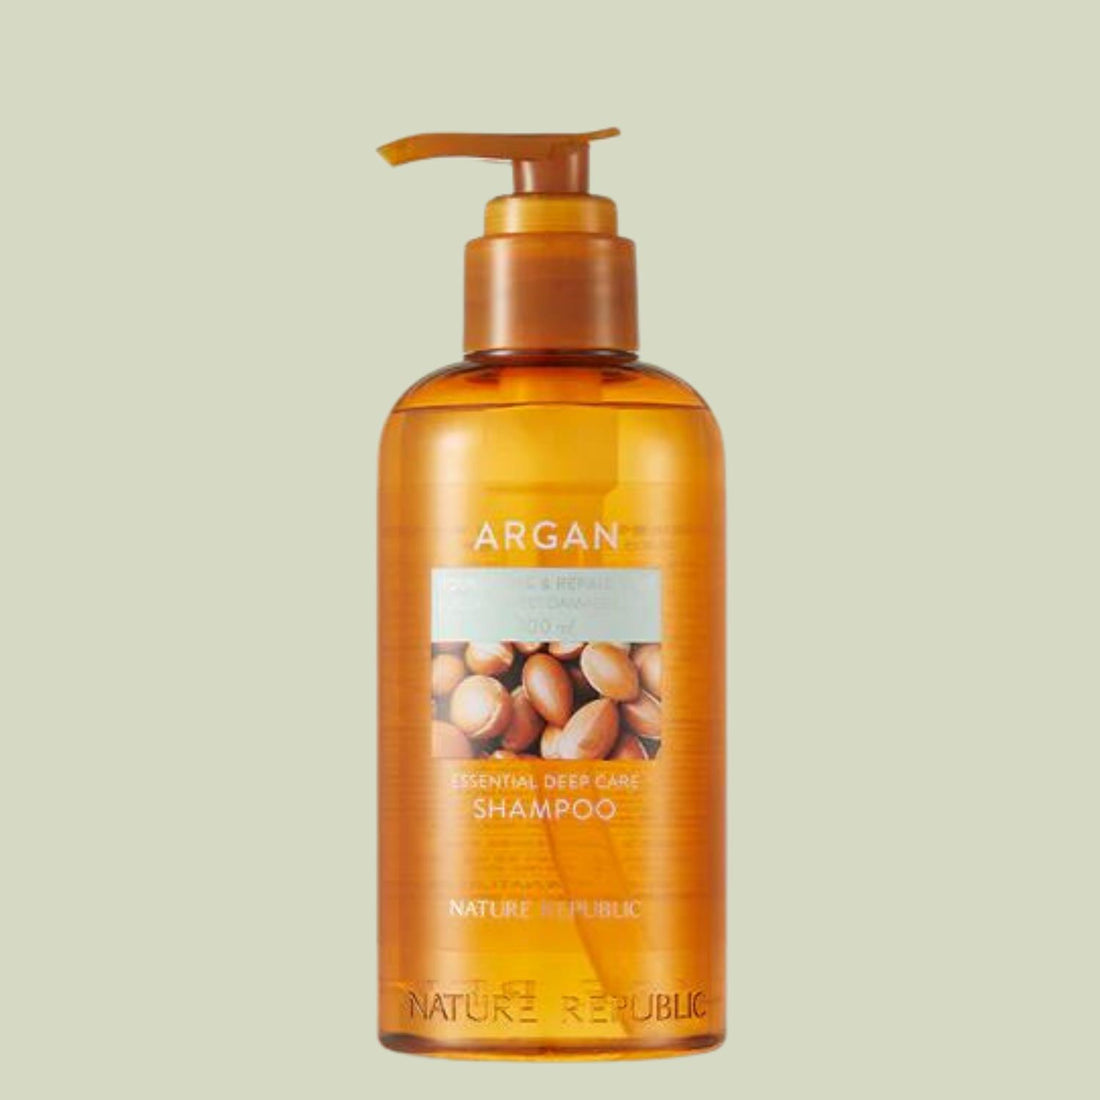 NATURE REPUBLIC Argan Essential Deep Care Shampoo 300ml Hair Care NATURE REPUBLIC ORION XO Sri Lanka